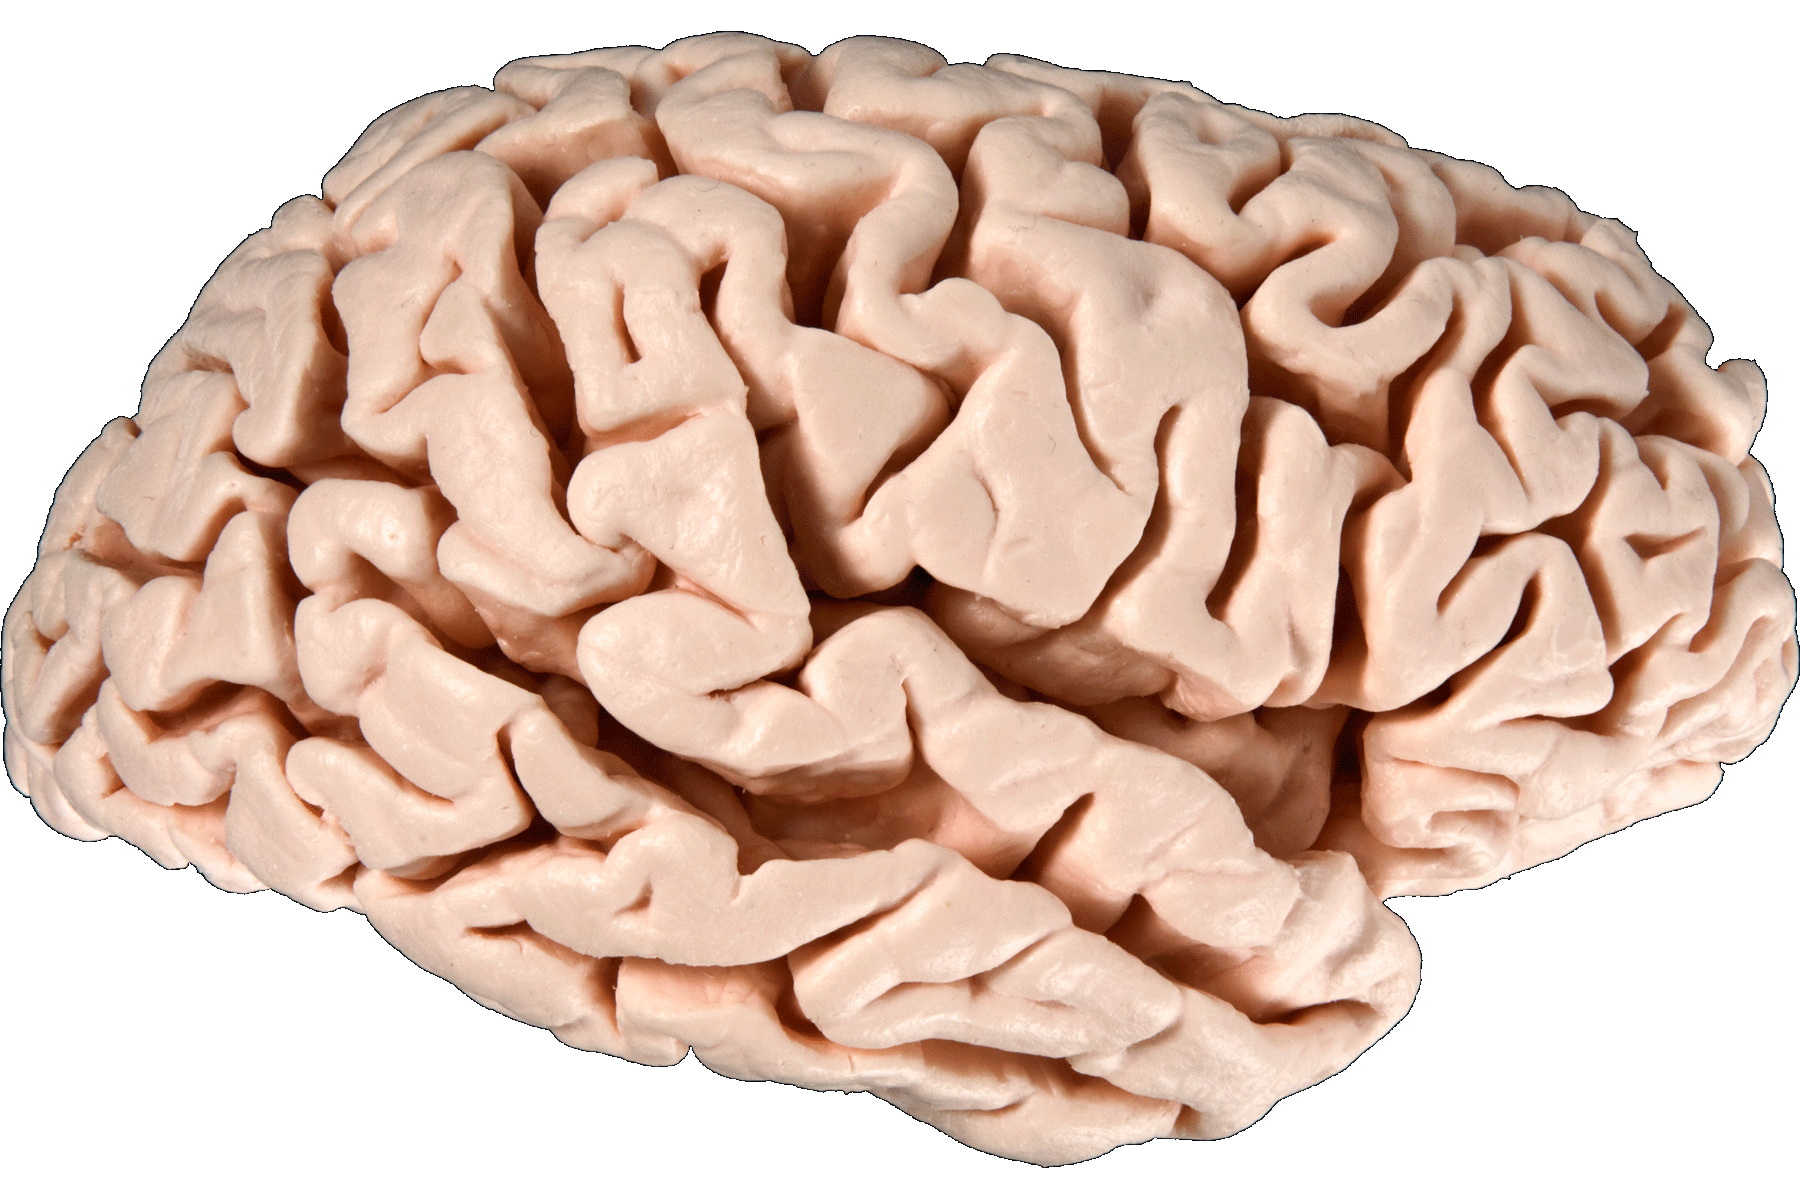 Right hemisphere